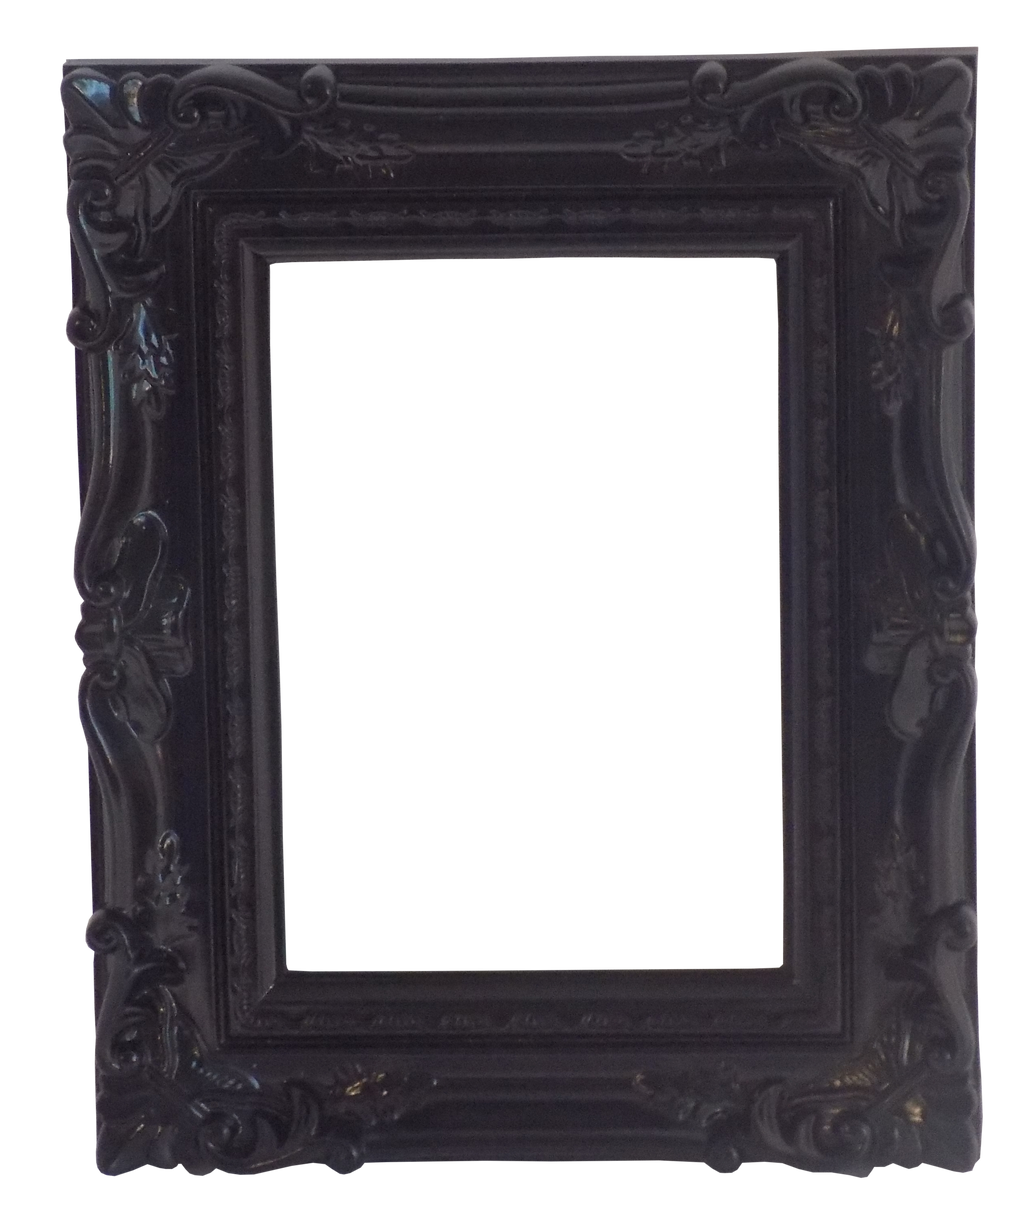 Ornate Black Frame by EnchantedWhispersArt on DeviantArt